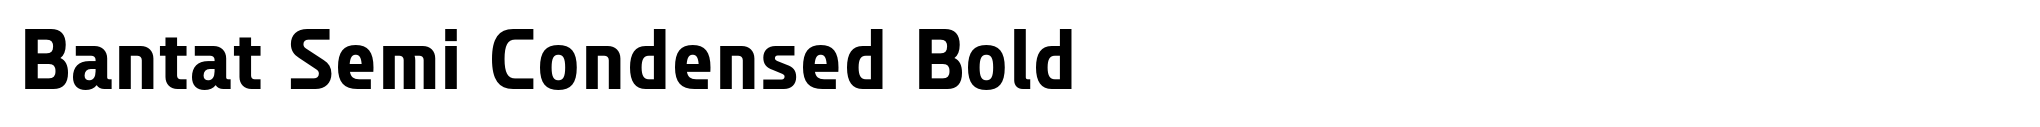 Bantat Semi Condensed Bold image